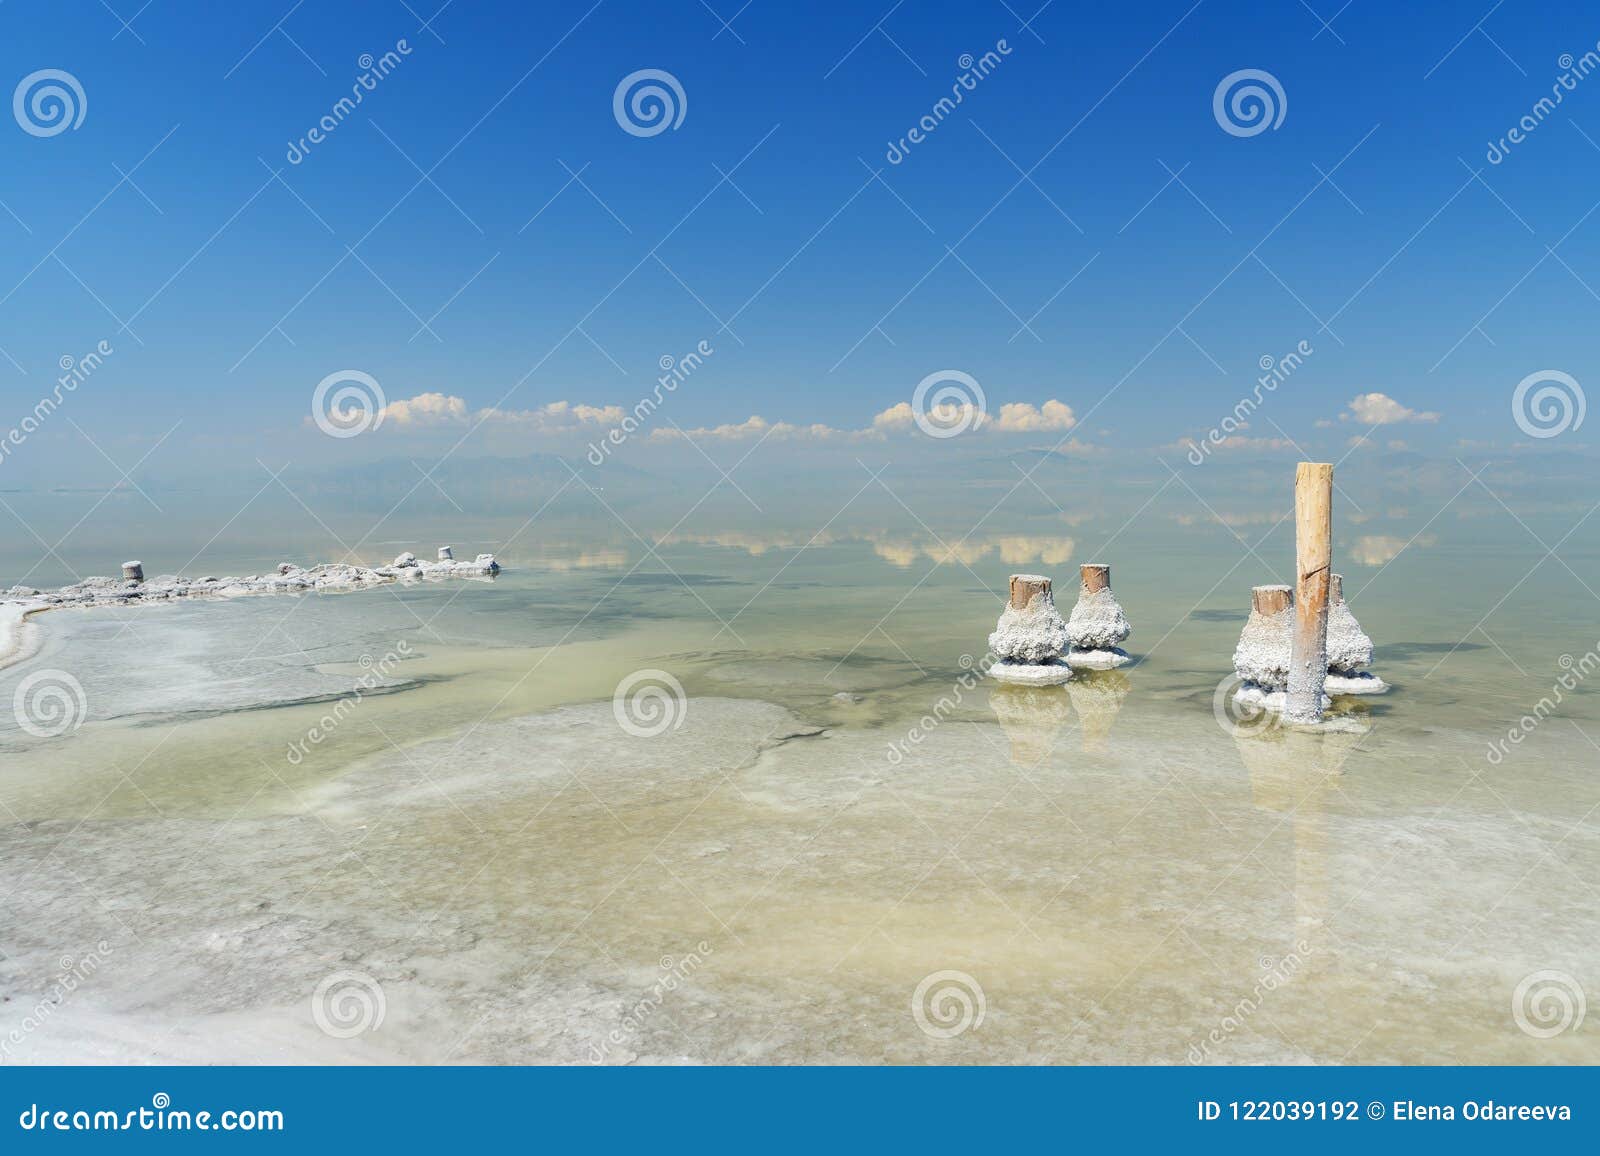 wooden pillars with crystallized salt on urmia salt lake. iran